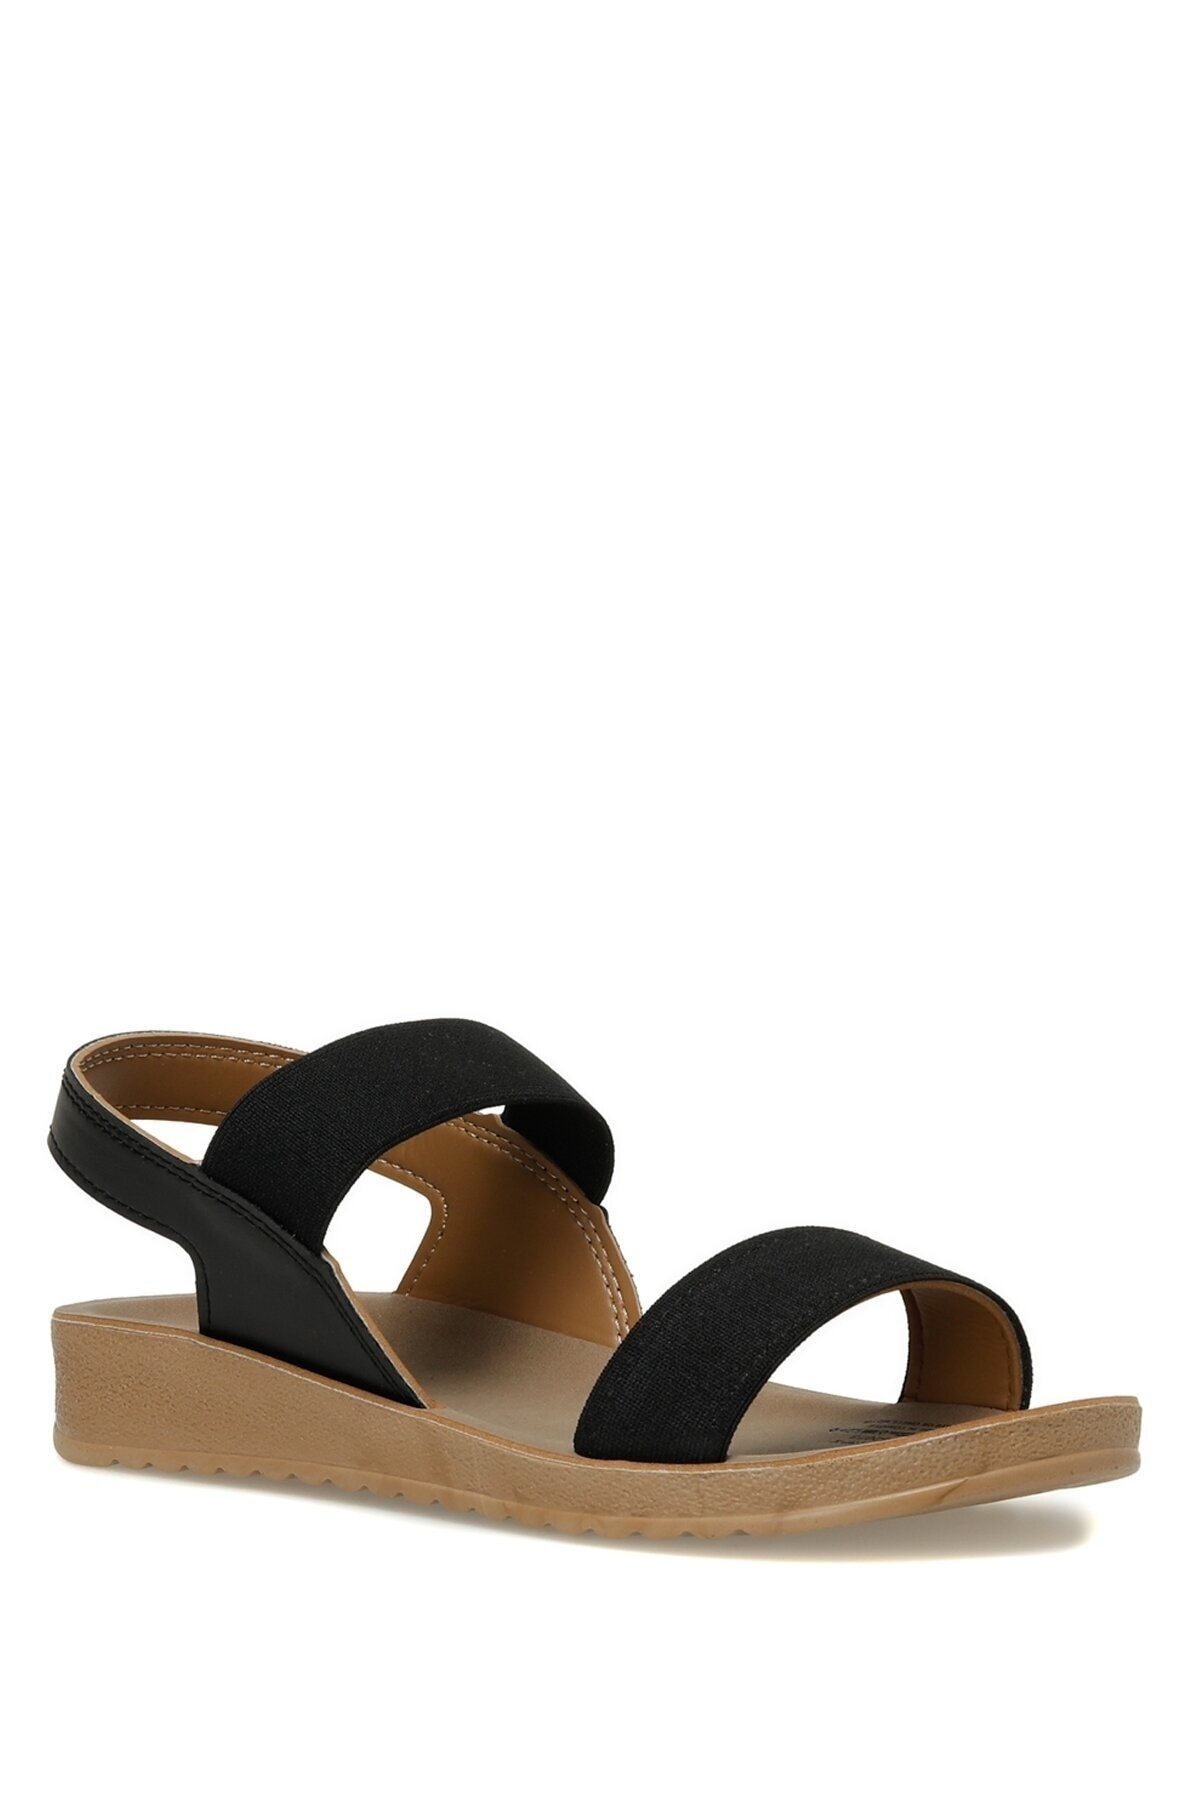 Polaris 161095.z3fx Women's Black Comfort Sandals